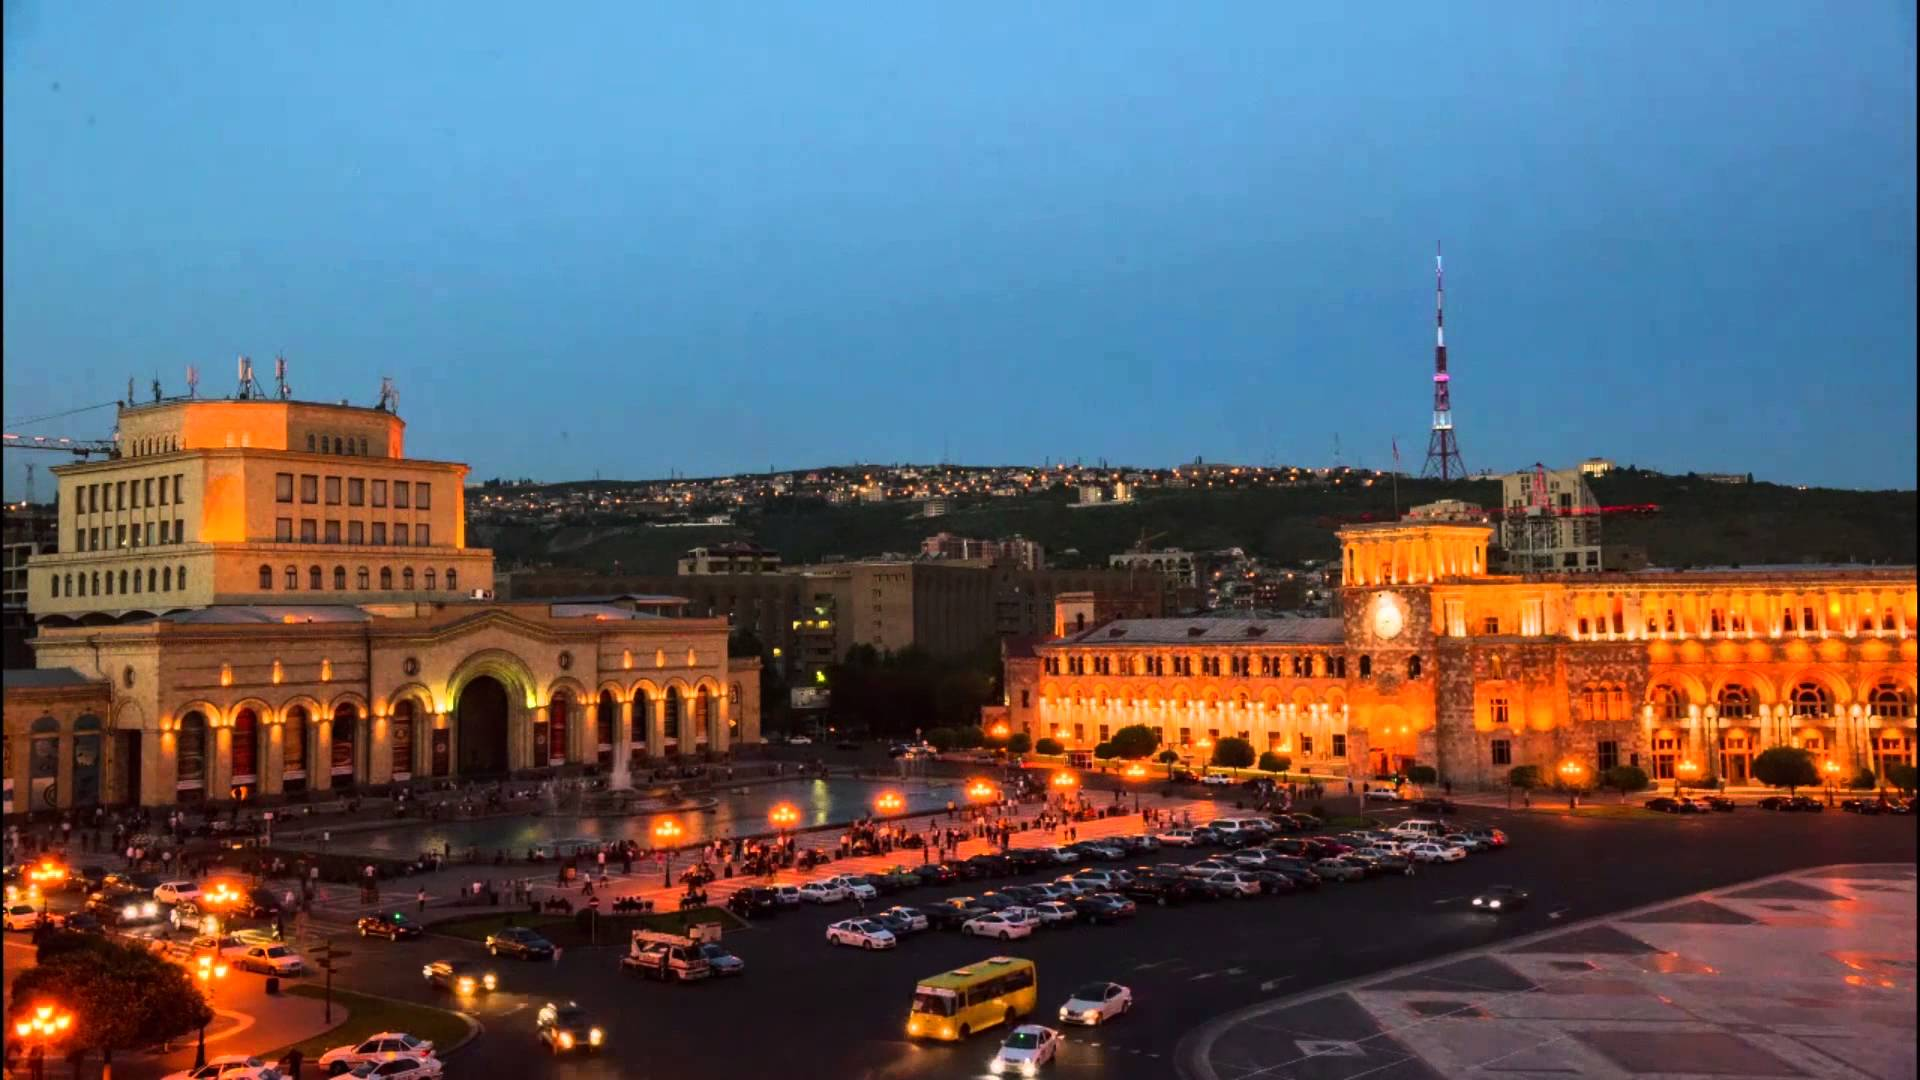 Откуда ереван. Площадь Республики Ереван. Площадь революции Ереван. Армения Ереван площадь Республики. Площадь независимости Ереван.